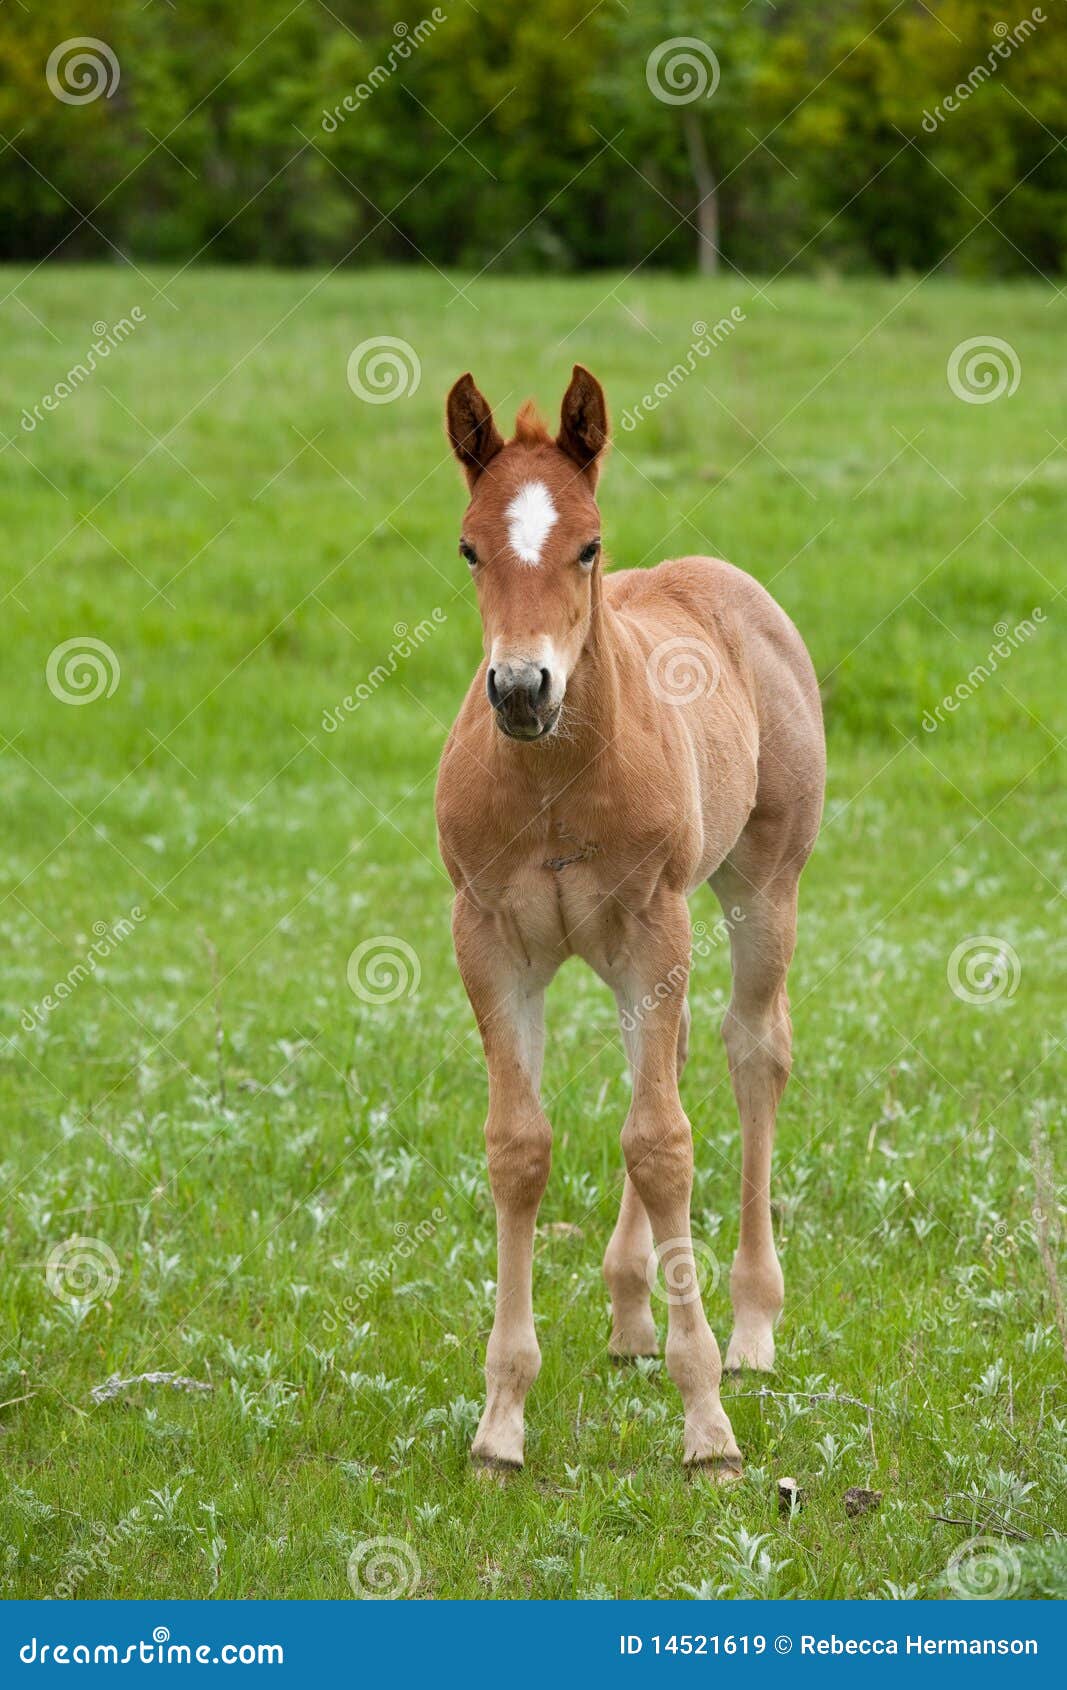 red roan quarter horse foal